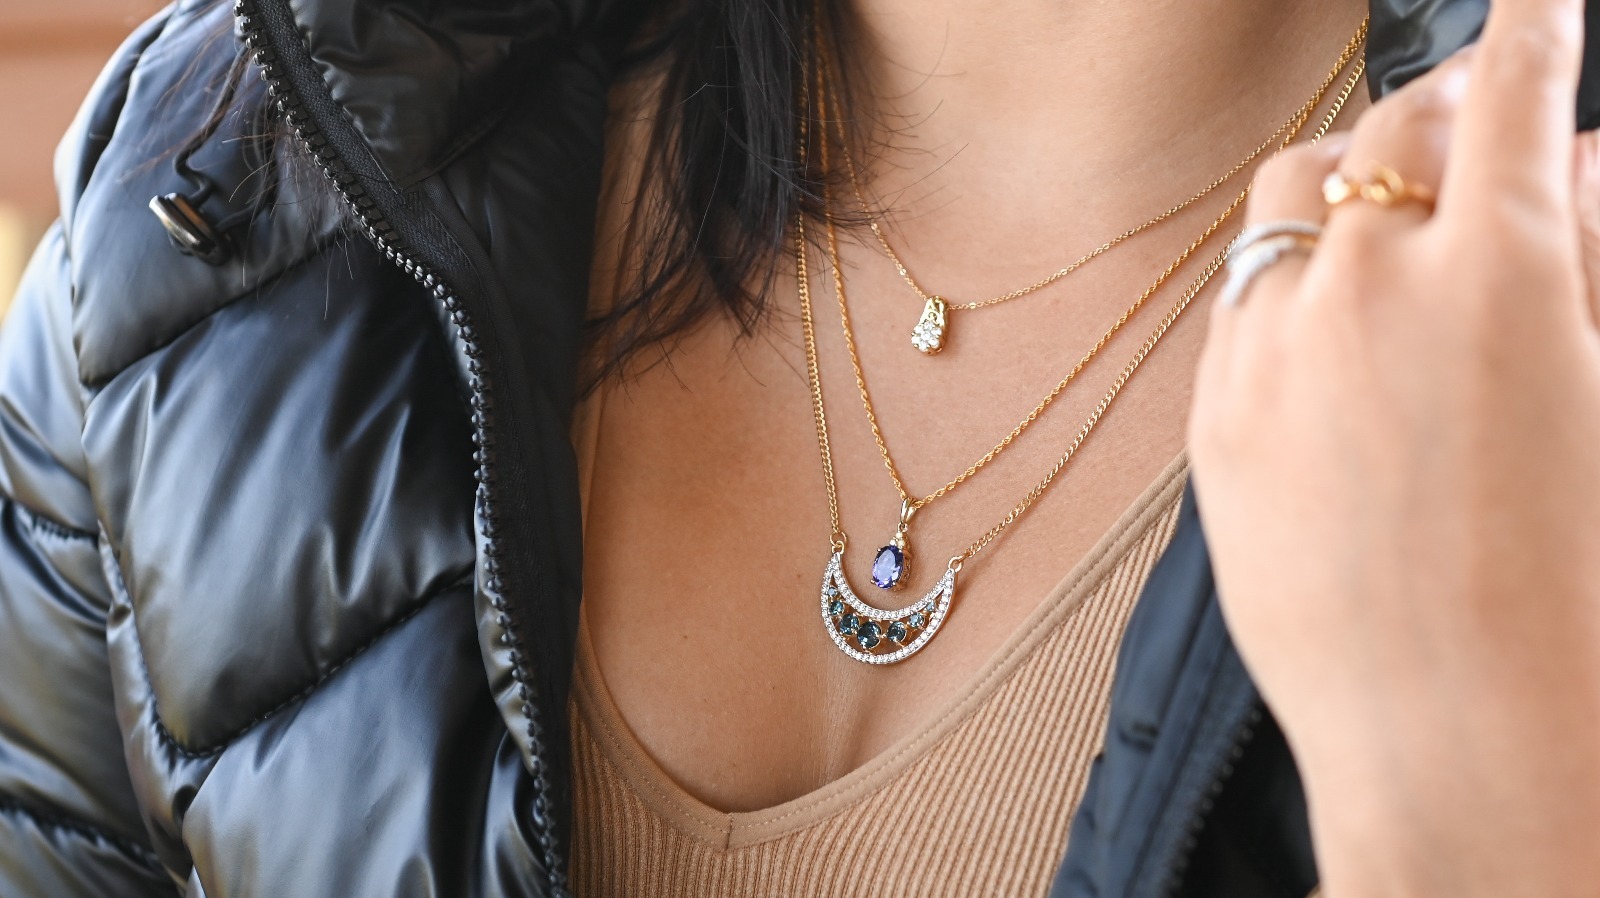 Rachel Galley Jewellery - Wearing beautiful jewellery keeps you healthy❤  More hewellery = More self-love😍 . . . . . #jewellery #jewelry #fashion  #earrings #necklace #handmade #gold #accessories #silver #jewellerydesign  #love #jewels #